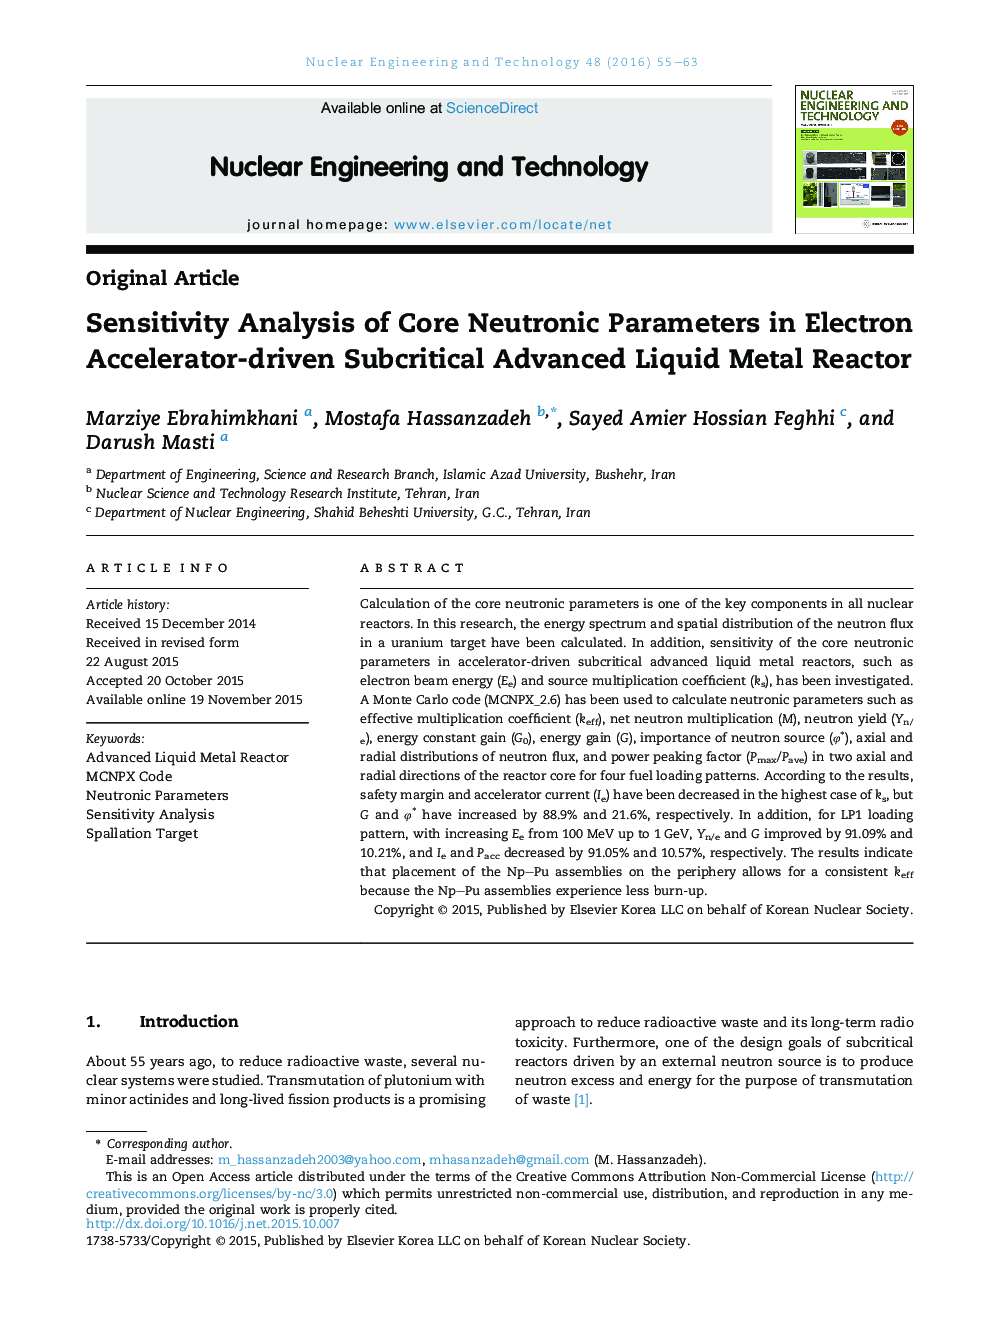 Sensitivity Analysis of Core Neutronic Parameters in Electron Accelerator-driven Subcritical Advanced Liquid Metal Reactor 